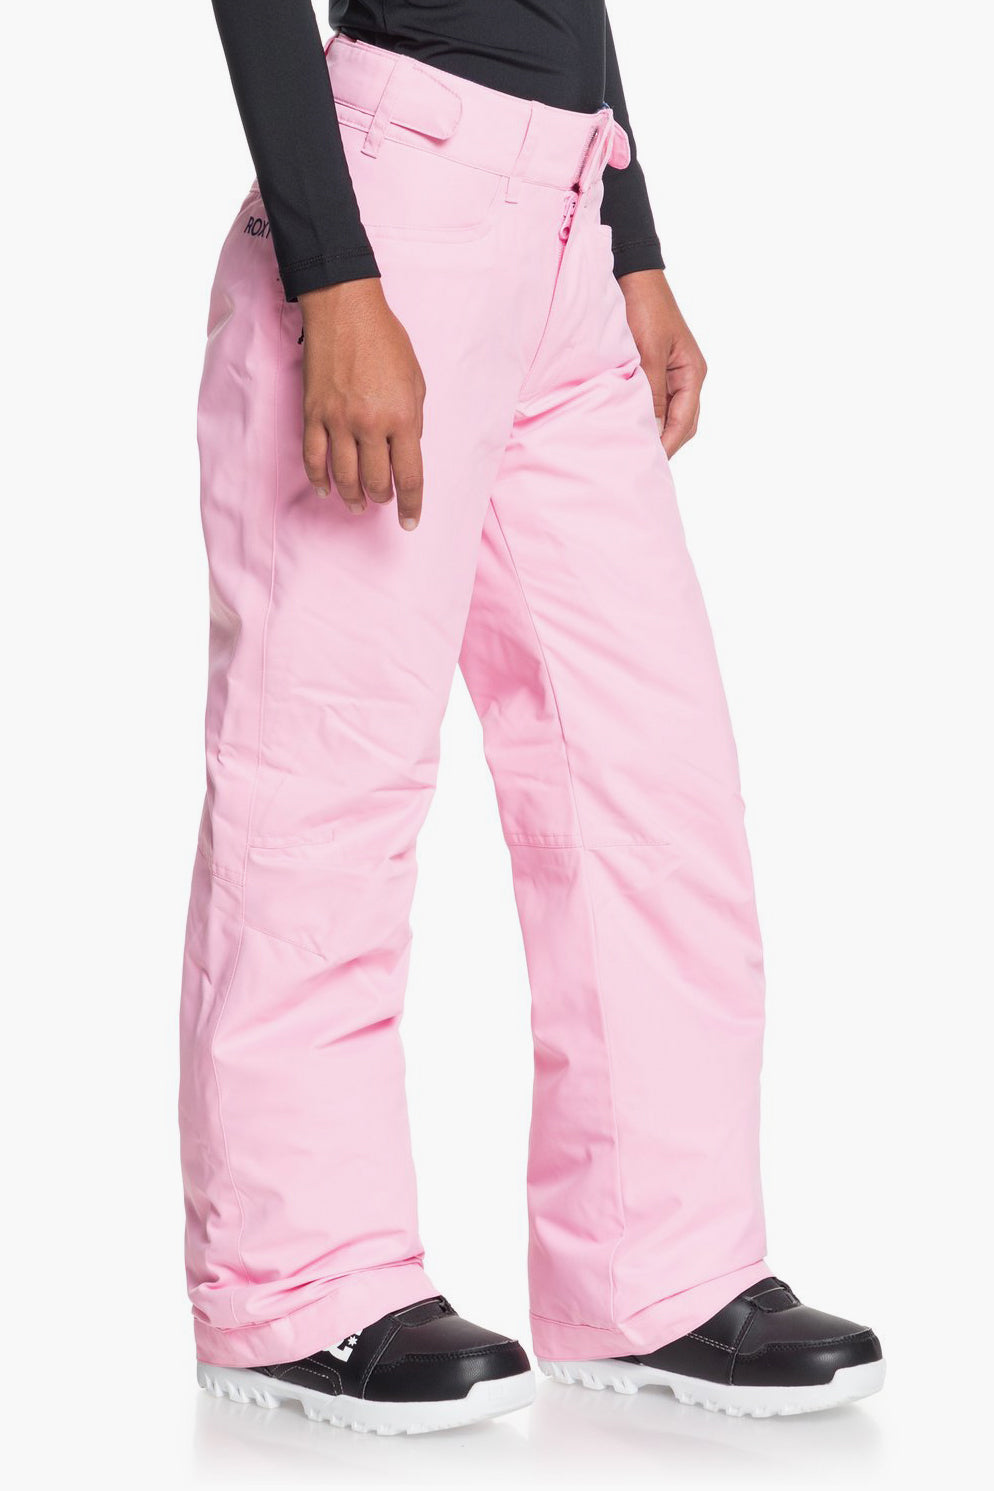 girls pink snow pants